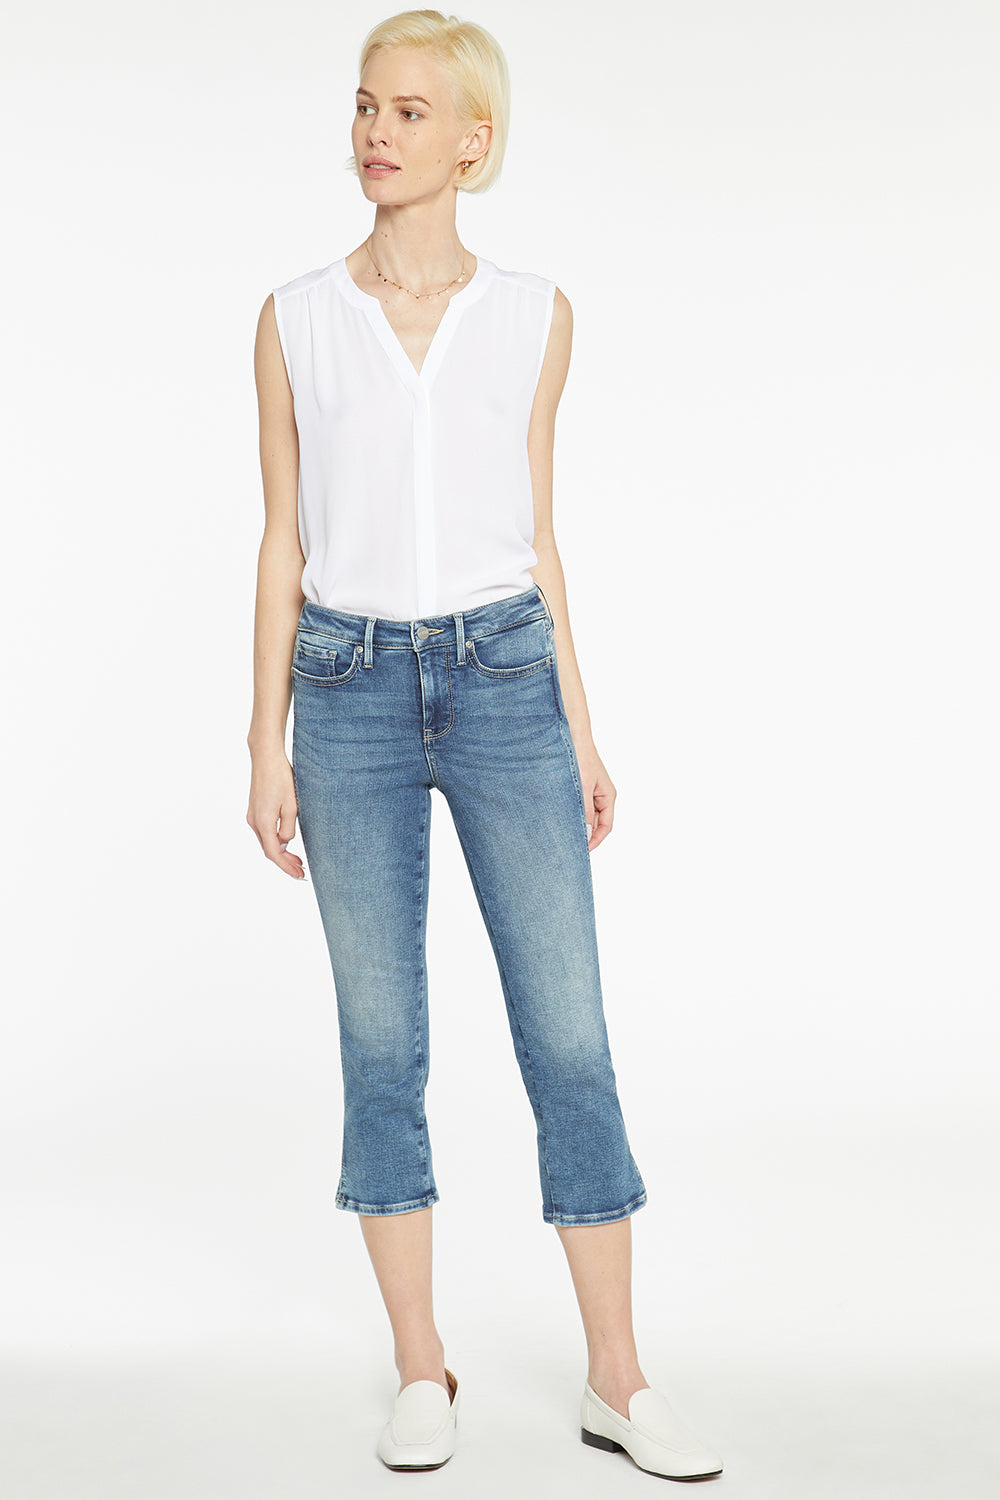 NYDJ Chloe Capri Jeans With Side Slits - Loire